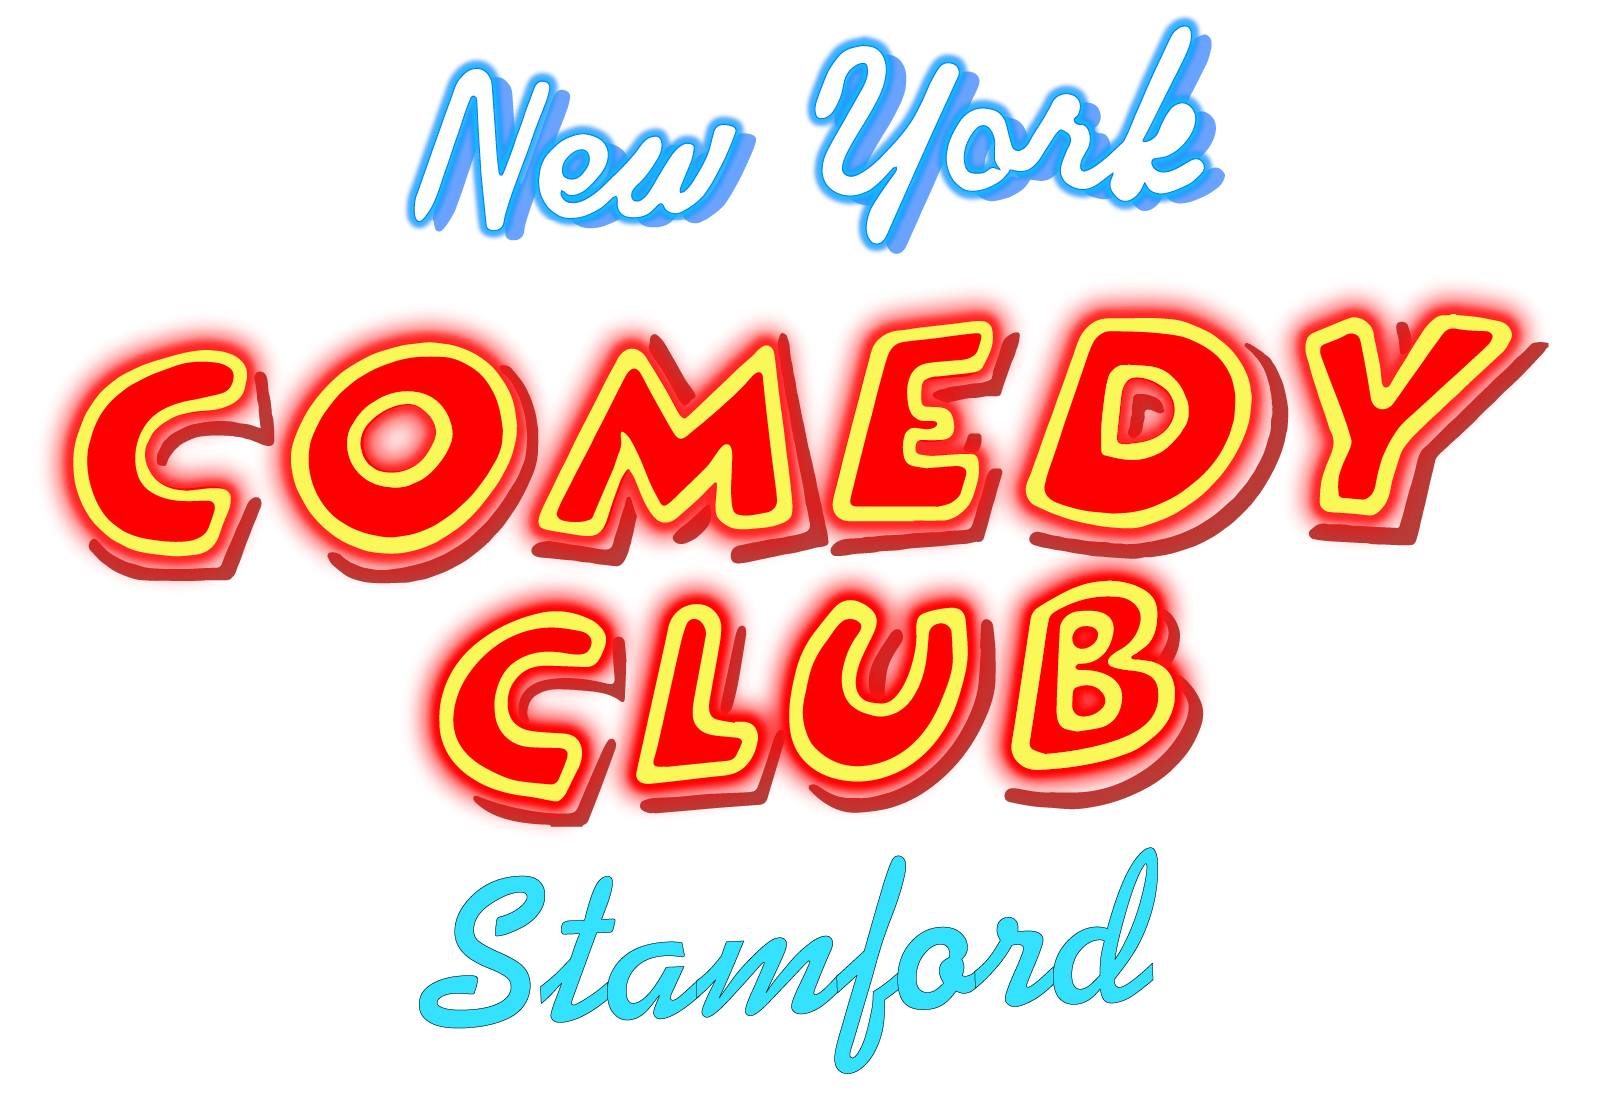 New York Comedy Club Stamford